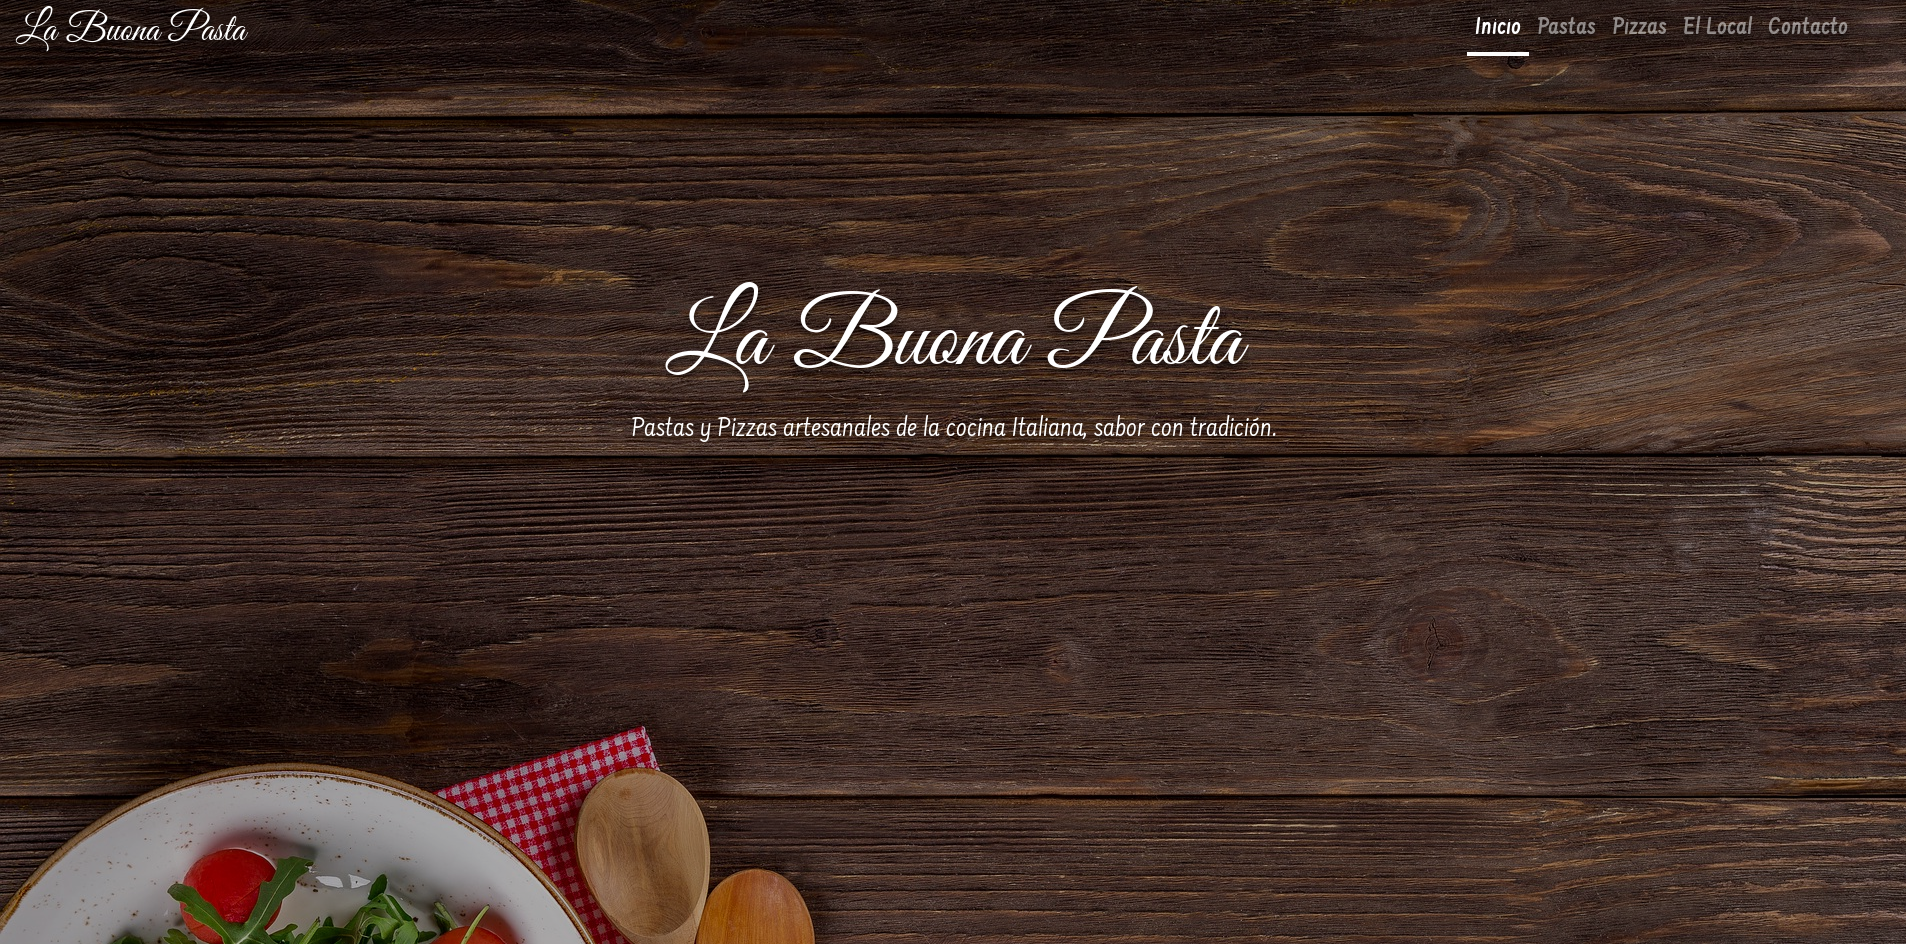 Web para restaurante Italiano